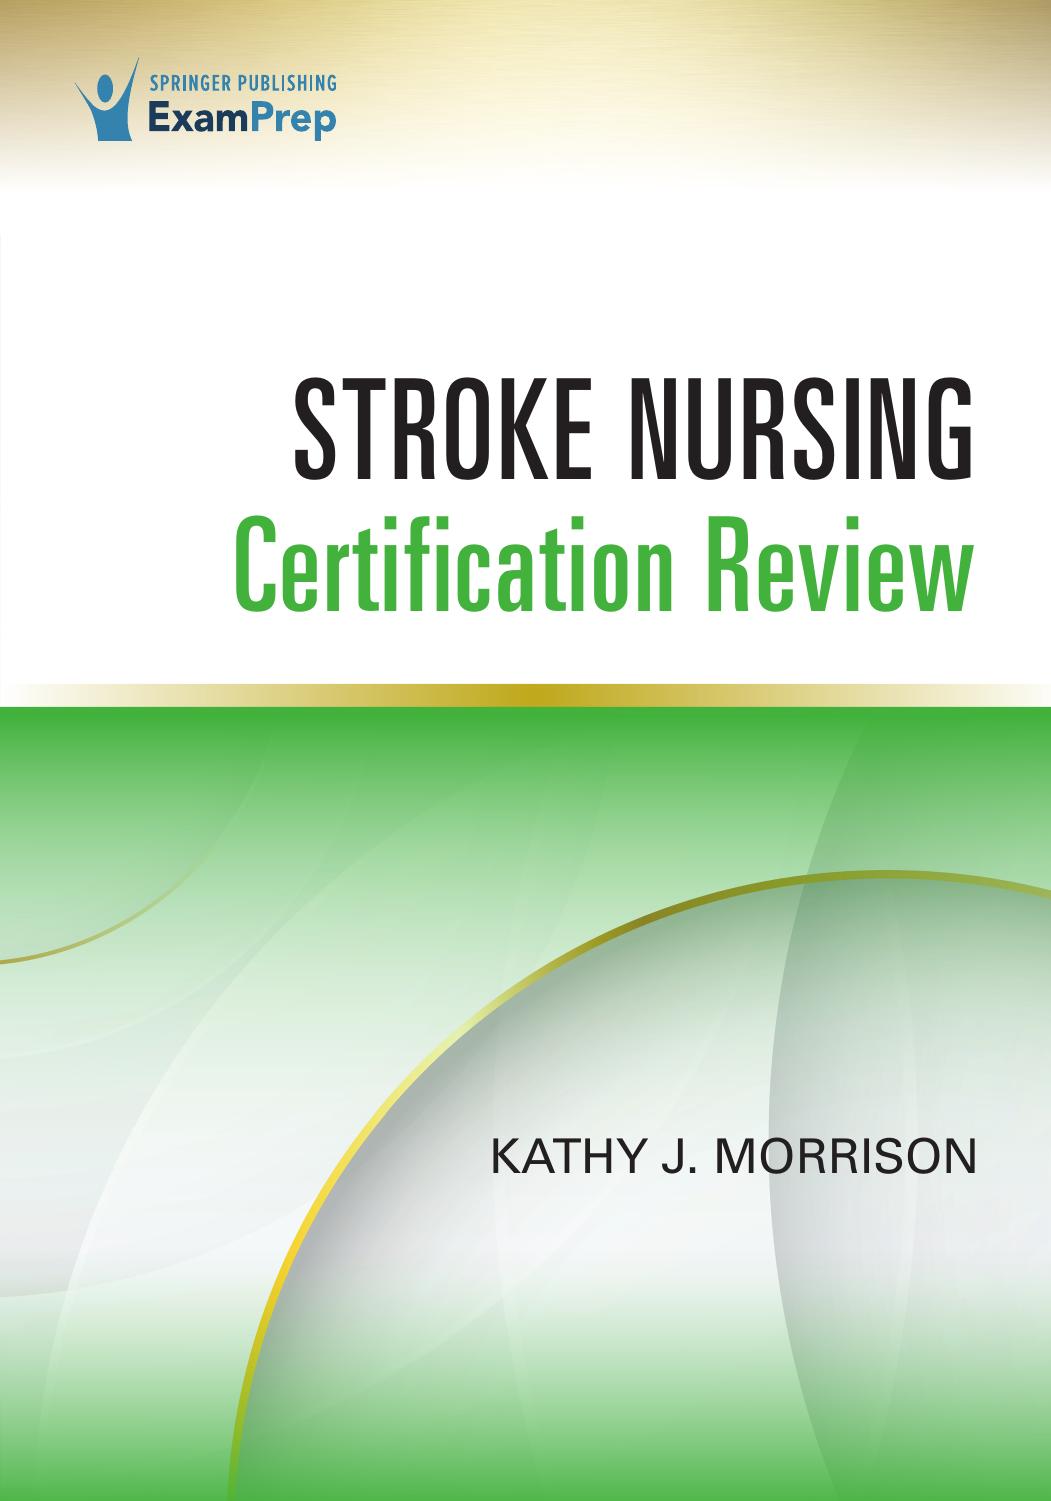 Stroke Nursing Certification Review by Kathy J. Morrison